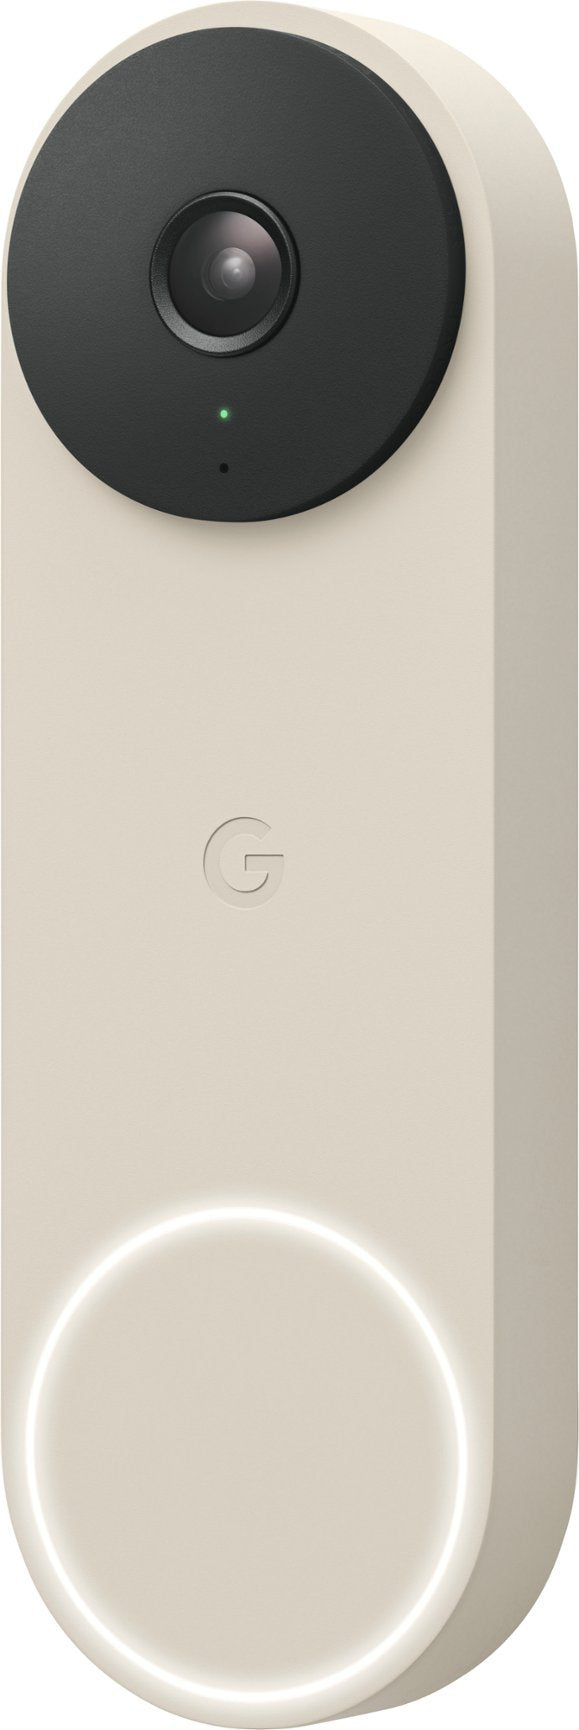 Google Nest Doorbell Wired (2nd Generation) (GA03695-US) - Linen  (New)